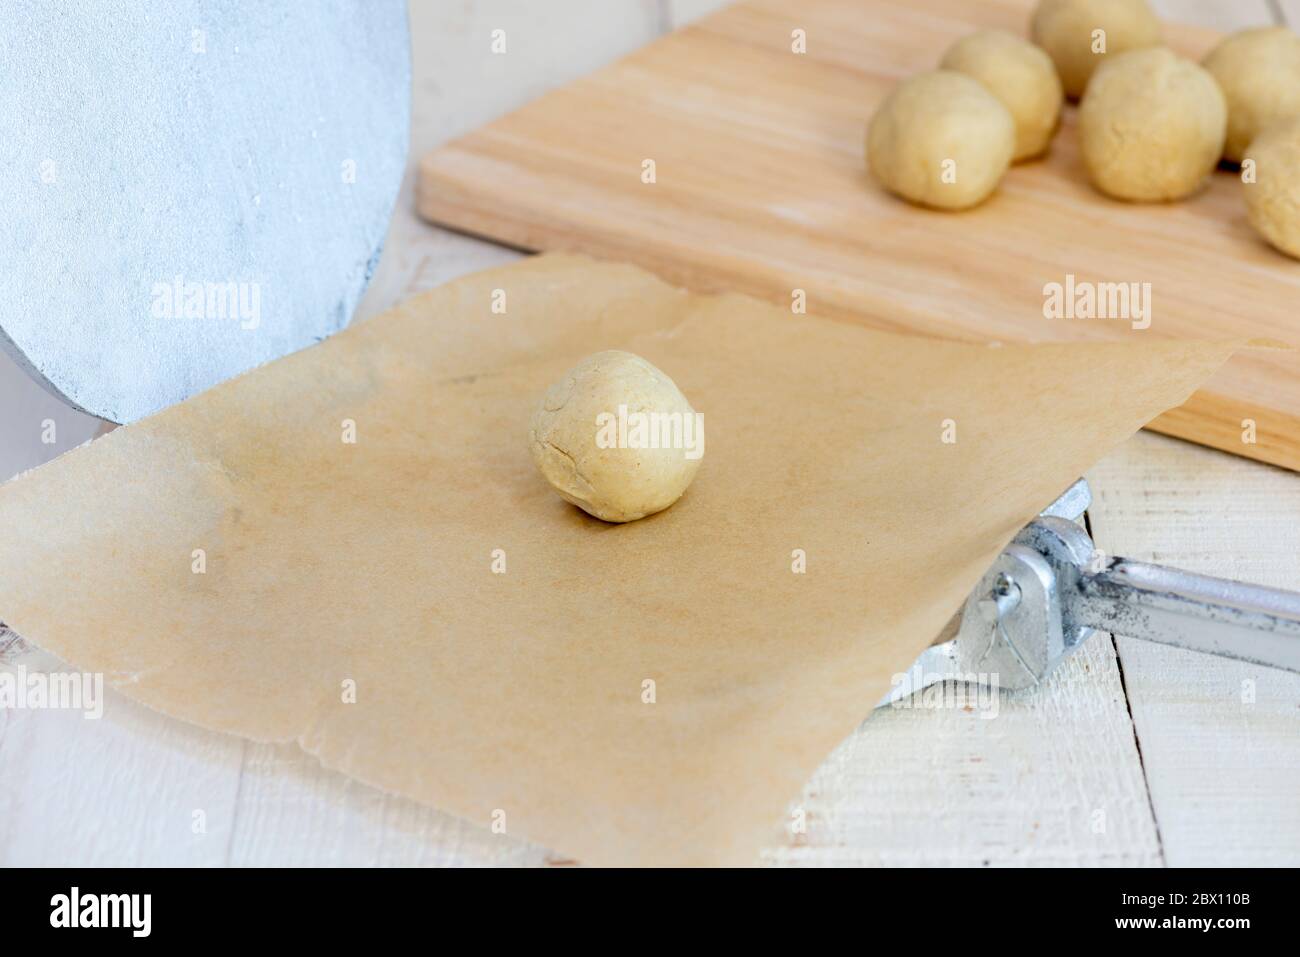 Making authentic corn tortillas - small ball of tortilla dough on tortilla press. Stock Photo